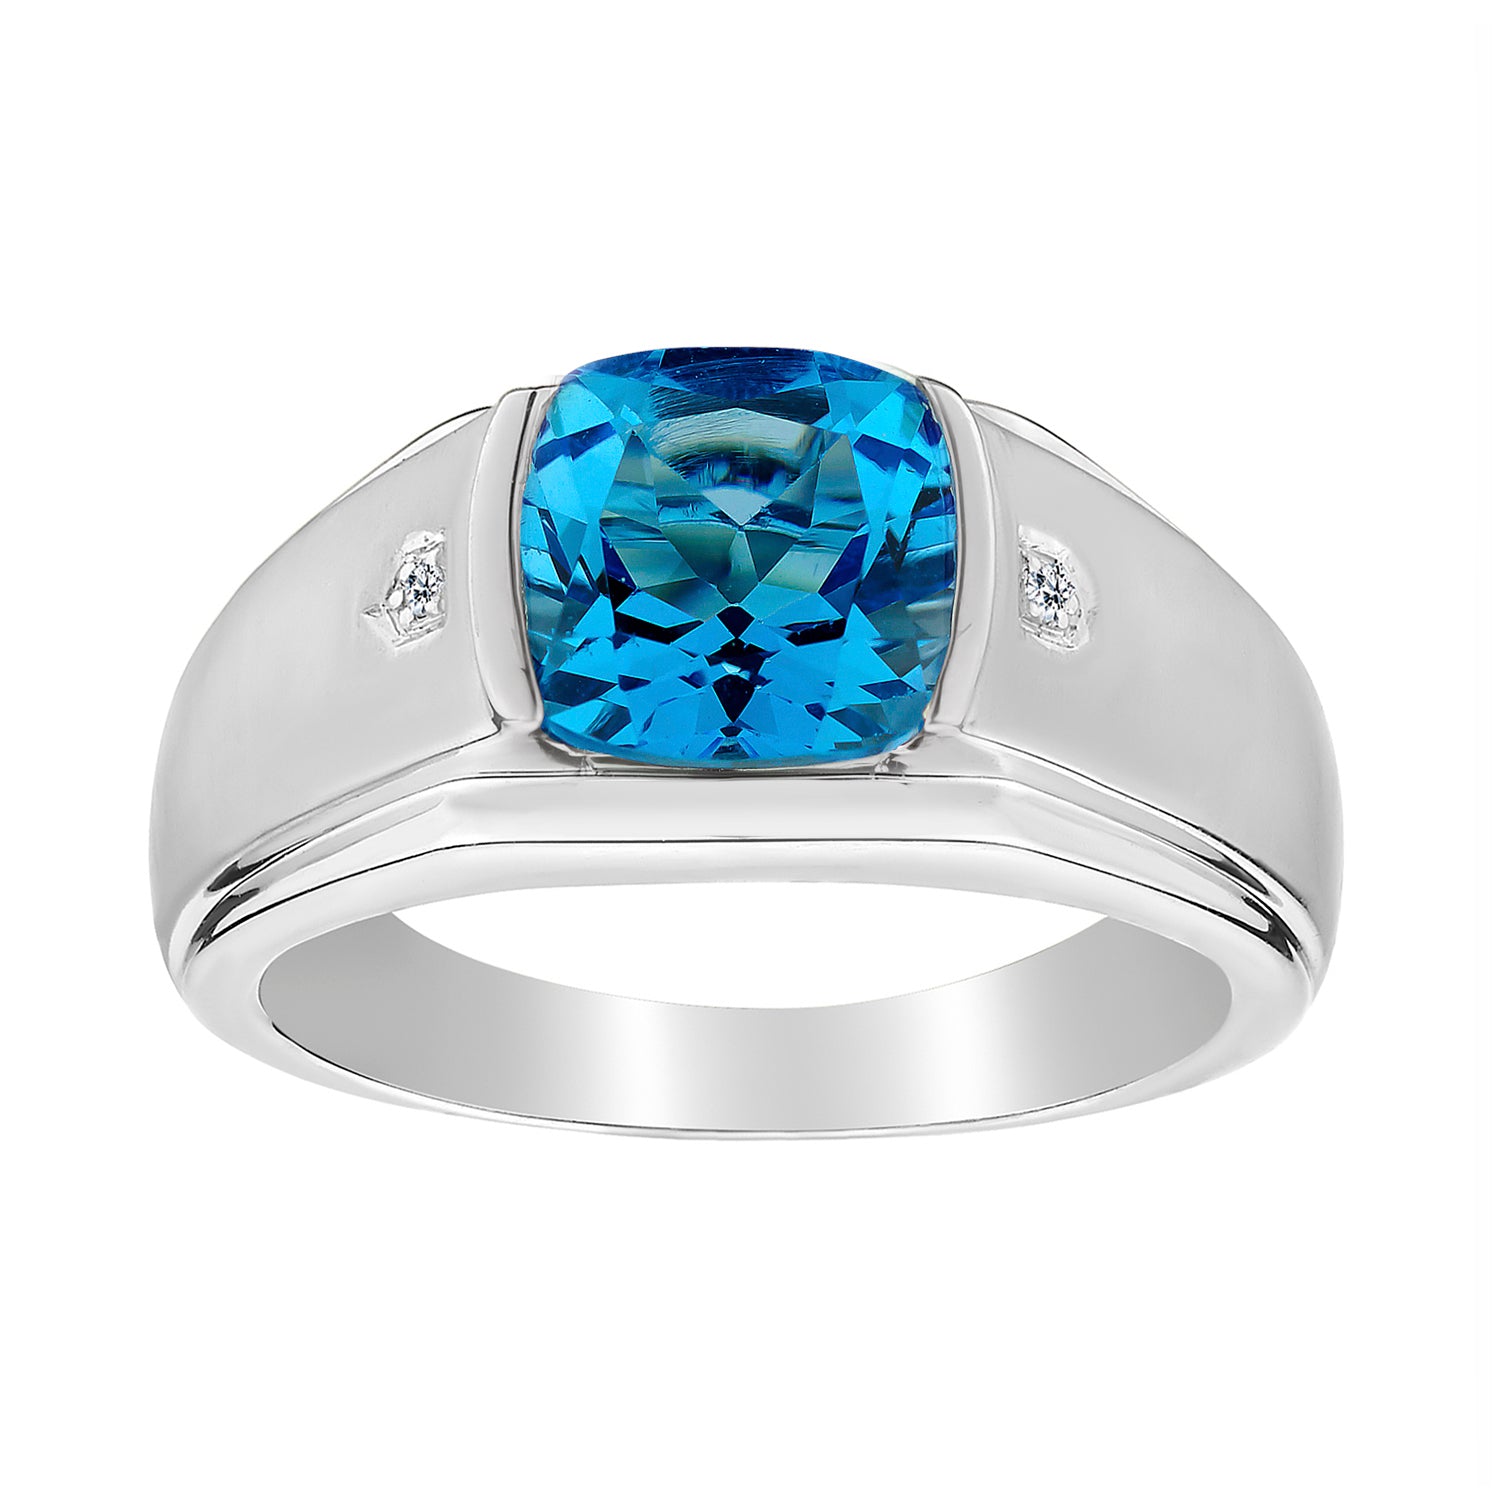 .015 carat Diamond & Genuine Blue Topaz Gentleman's Ring, Silver. Men's Rings. Griffin Jewellery Designs. 